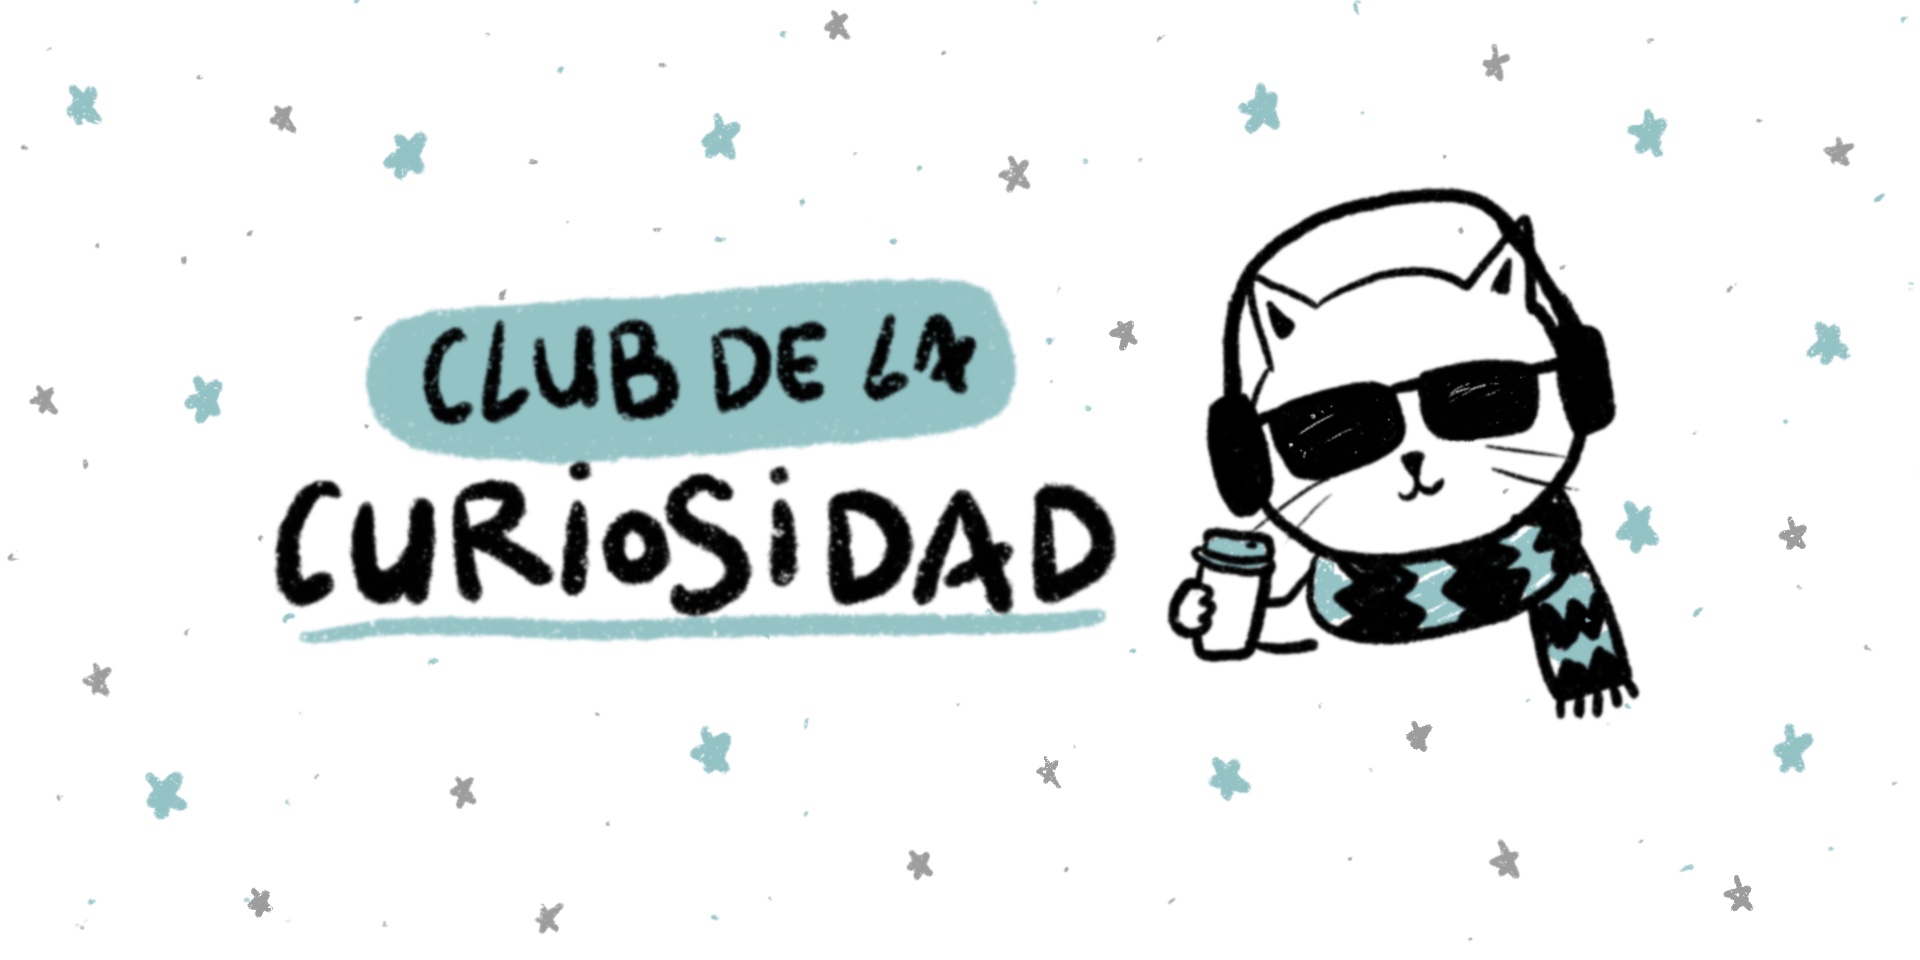 (c) Curiosidad.club